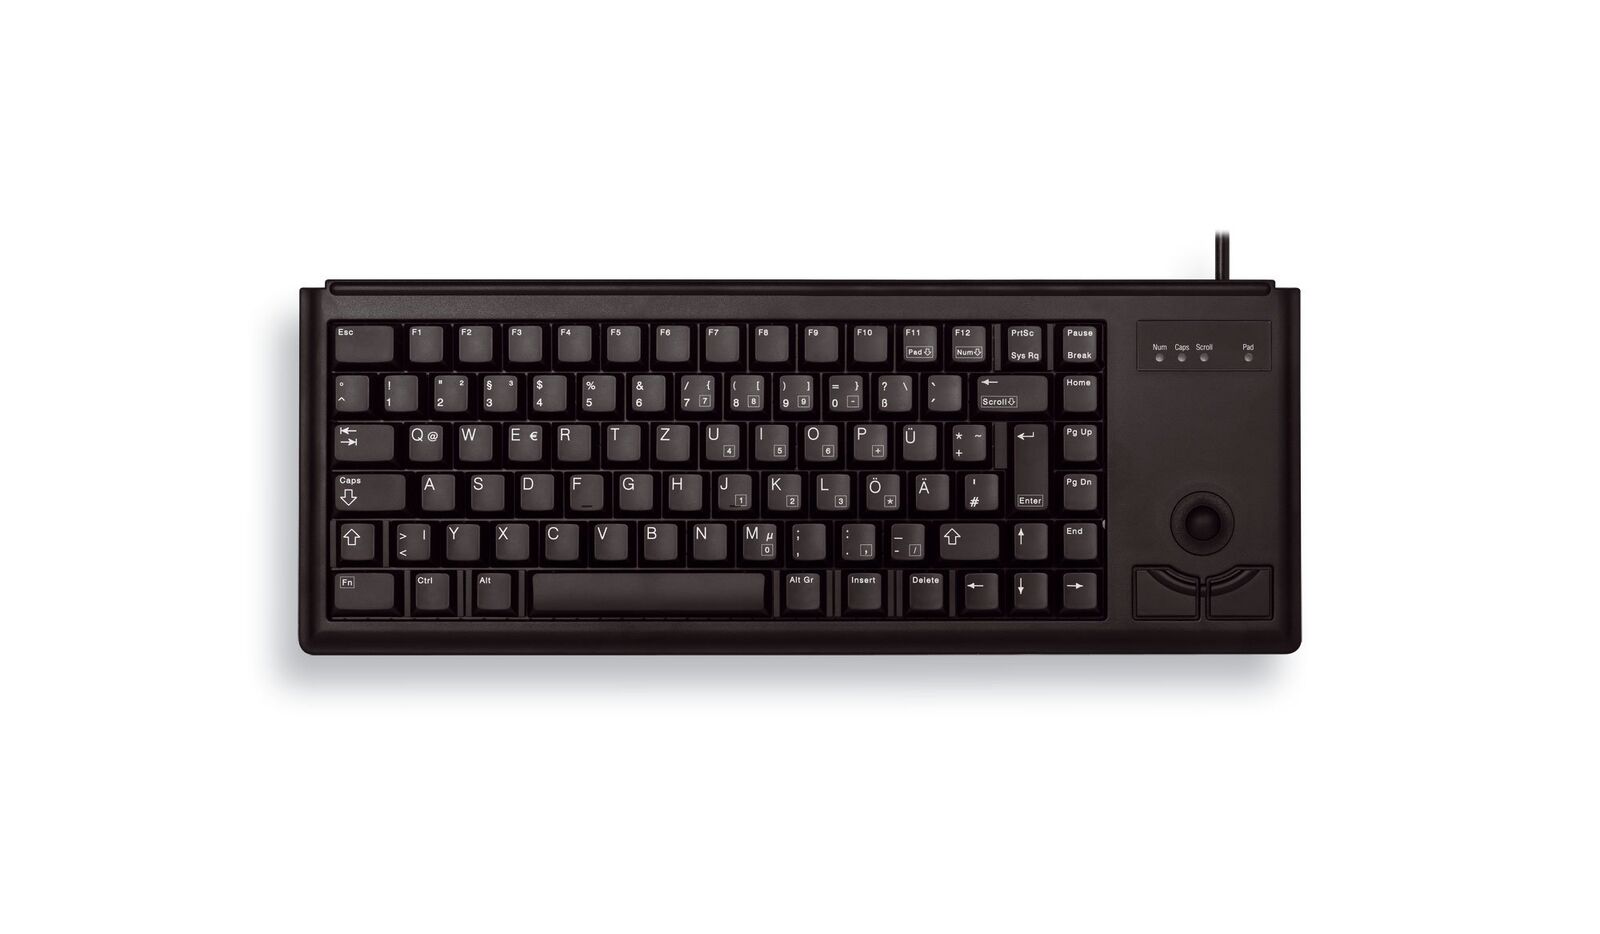 CHERRY Compact-Keyboard G84-4400, American layout, QWERTY keyboard, wired keyboa